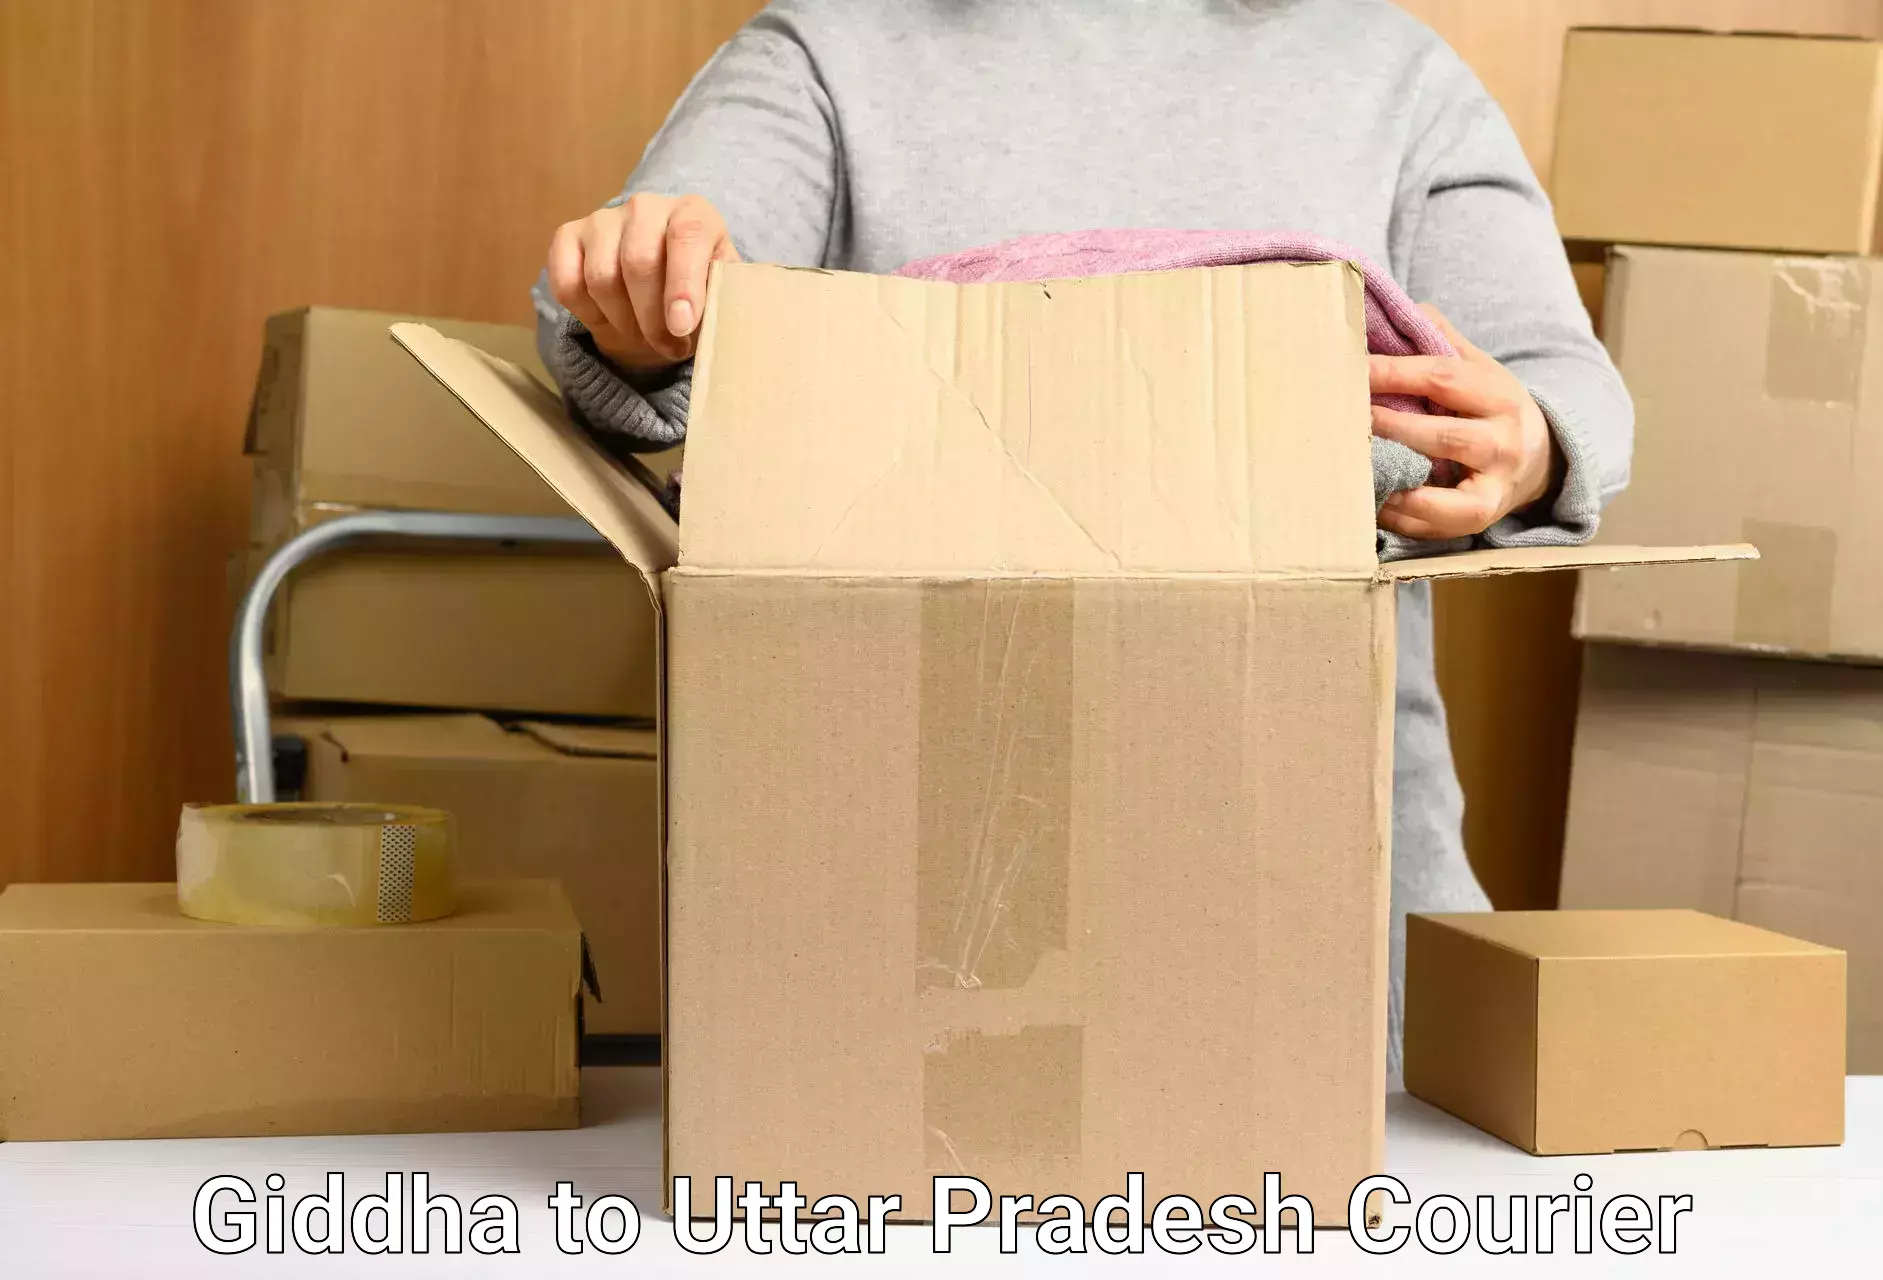 Courier service booking in Giddha to Uttar Pradesh